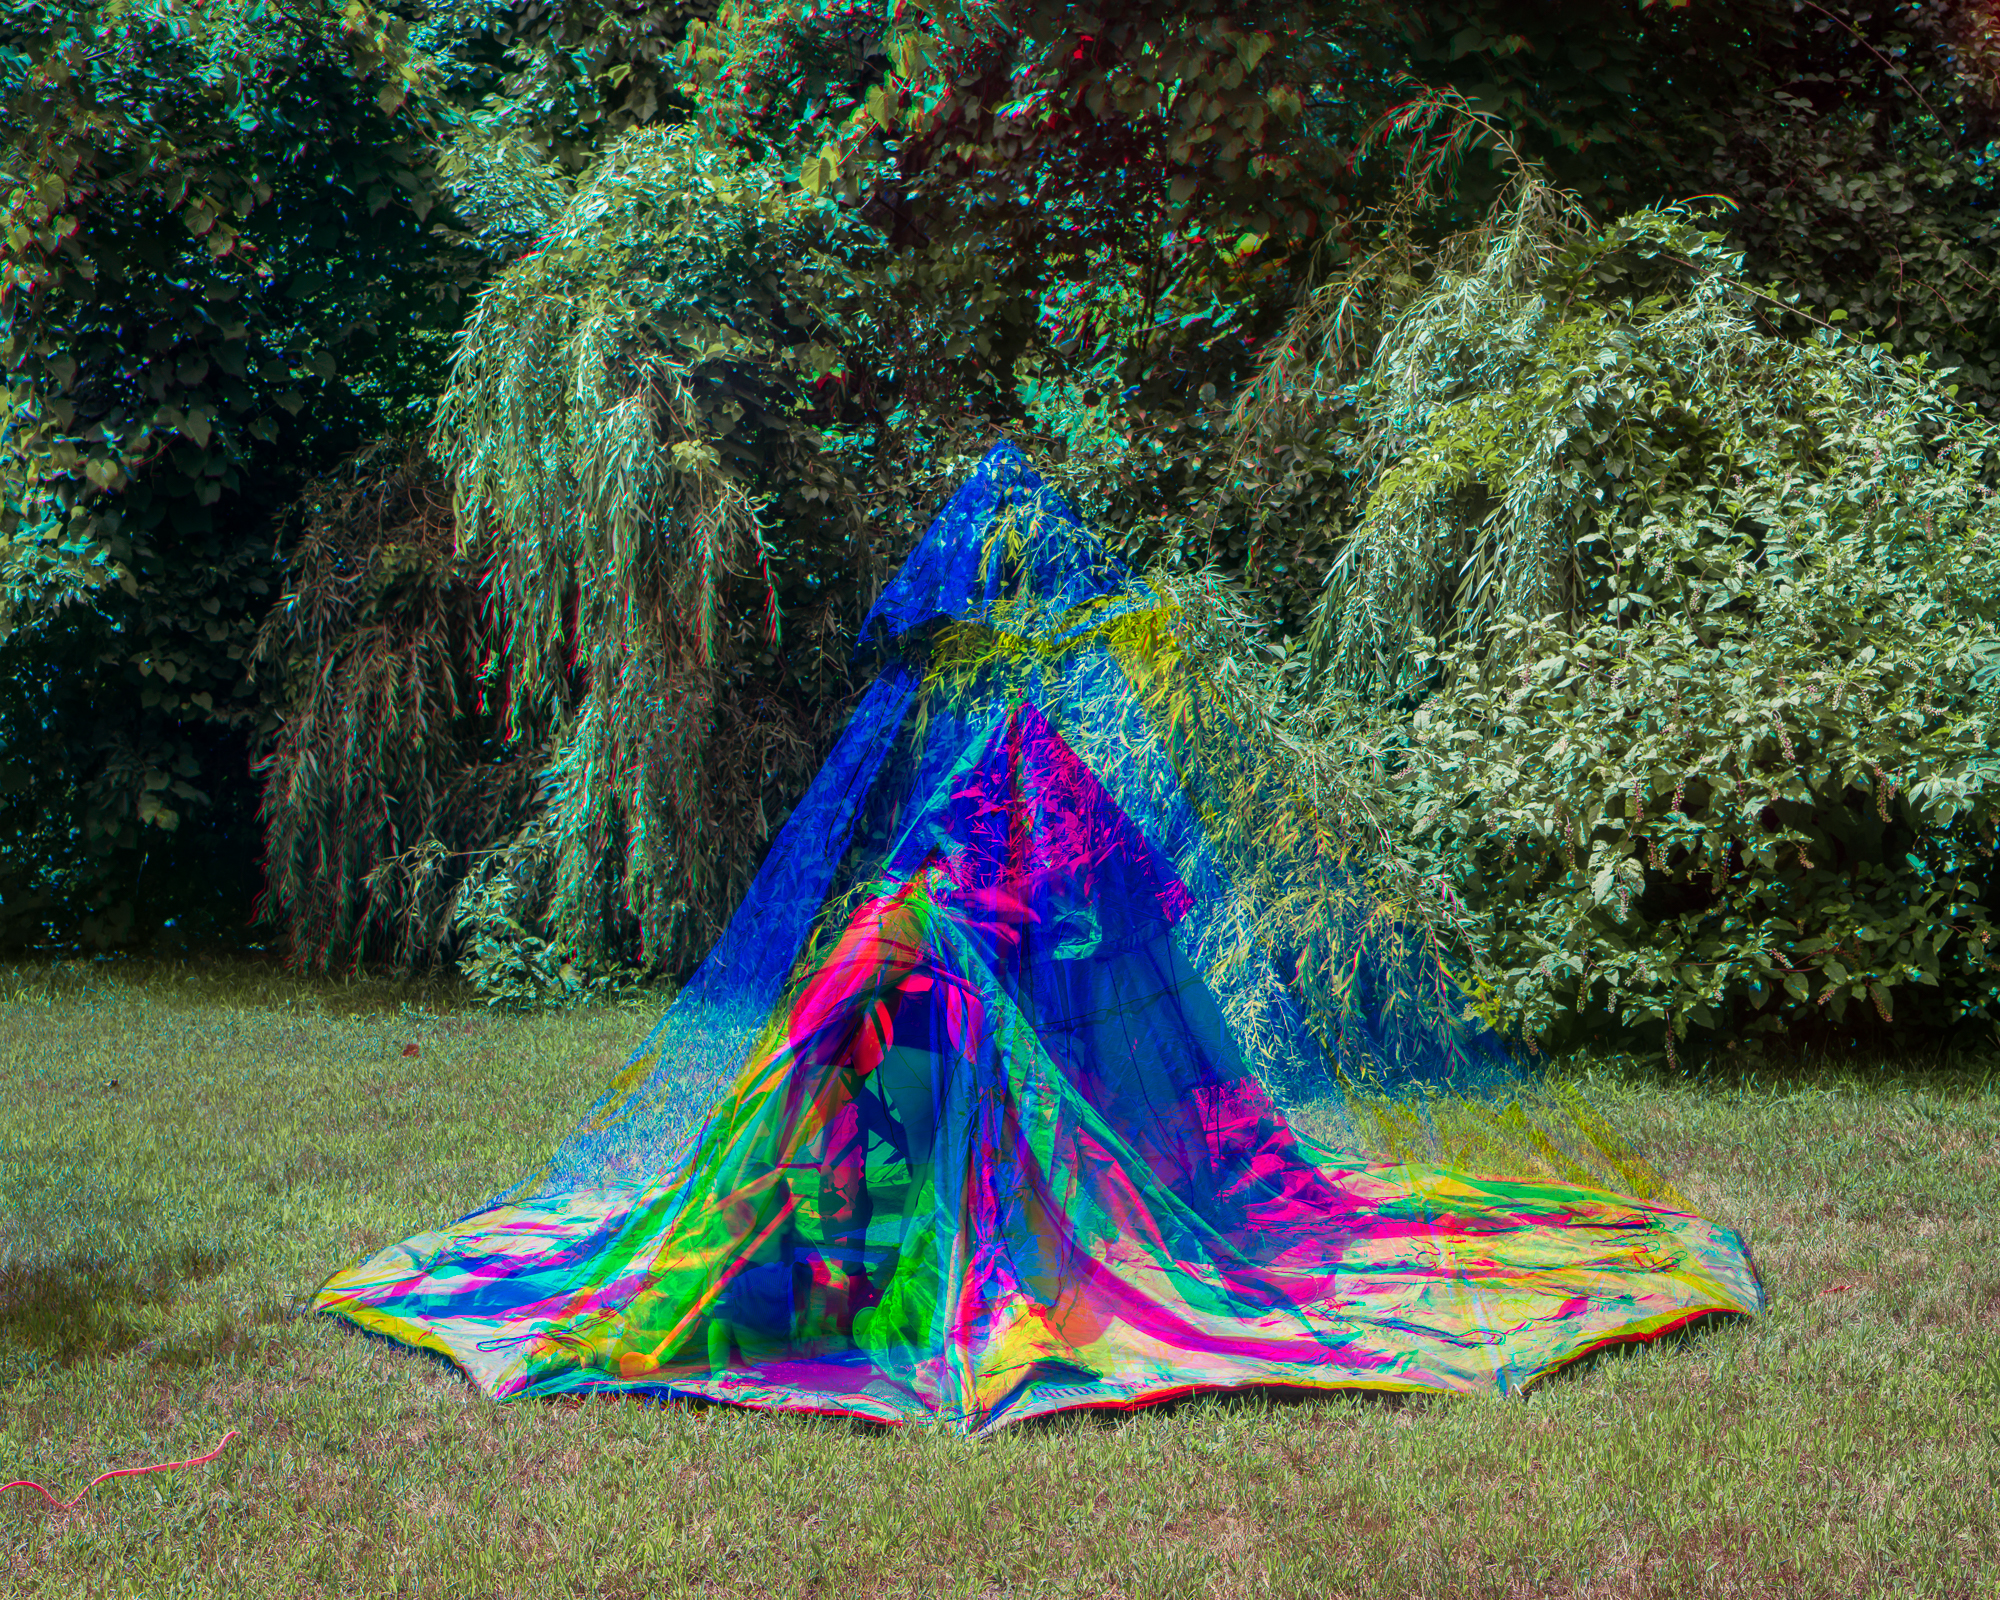   Setting Up Tent , 2015 Archival pigment print 24 x 30 in (60.96 x 76.2 cm)&nbsp;  